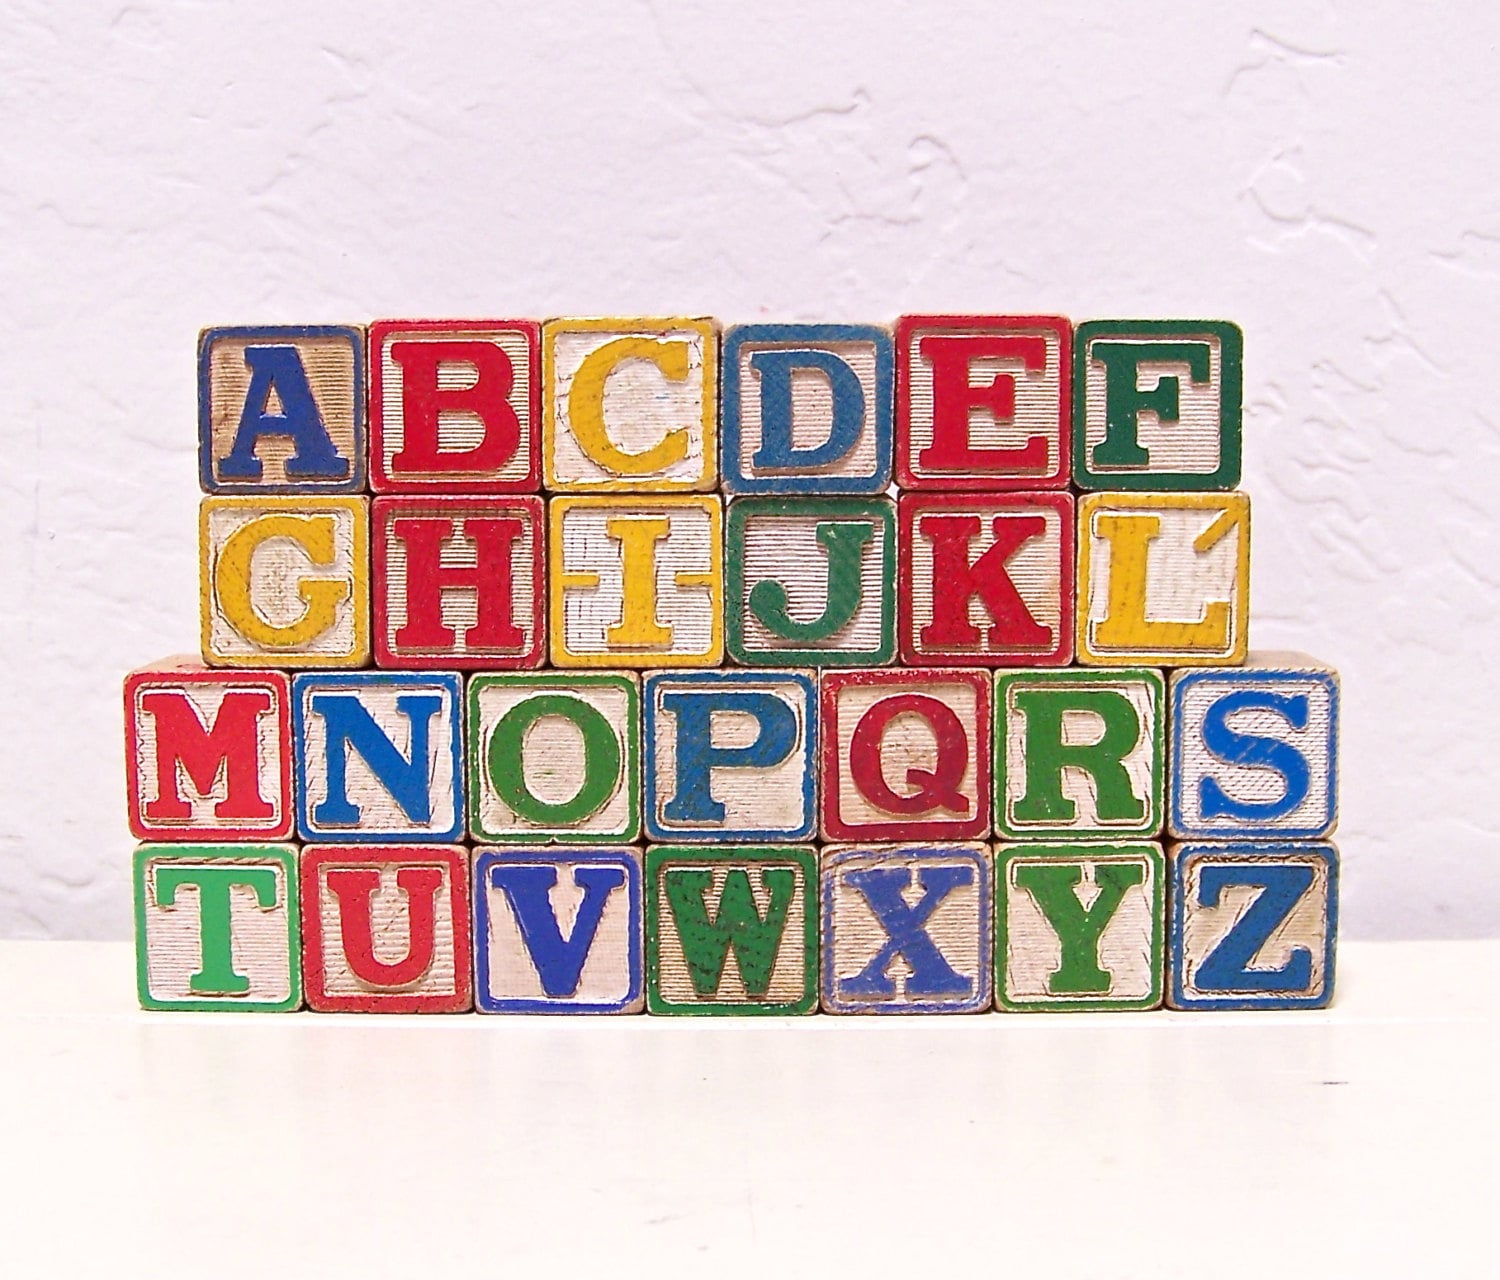 soft alphabet blocks